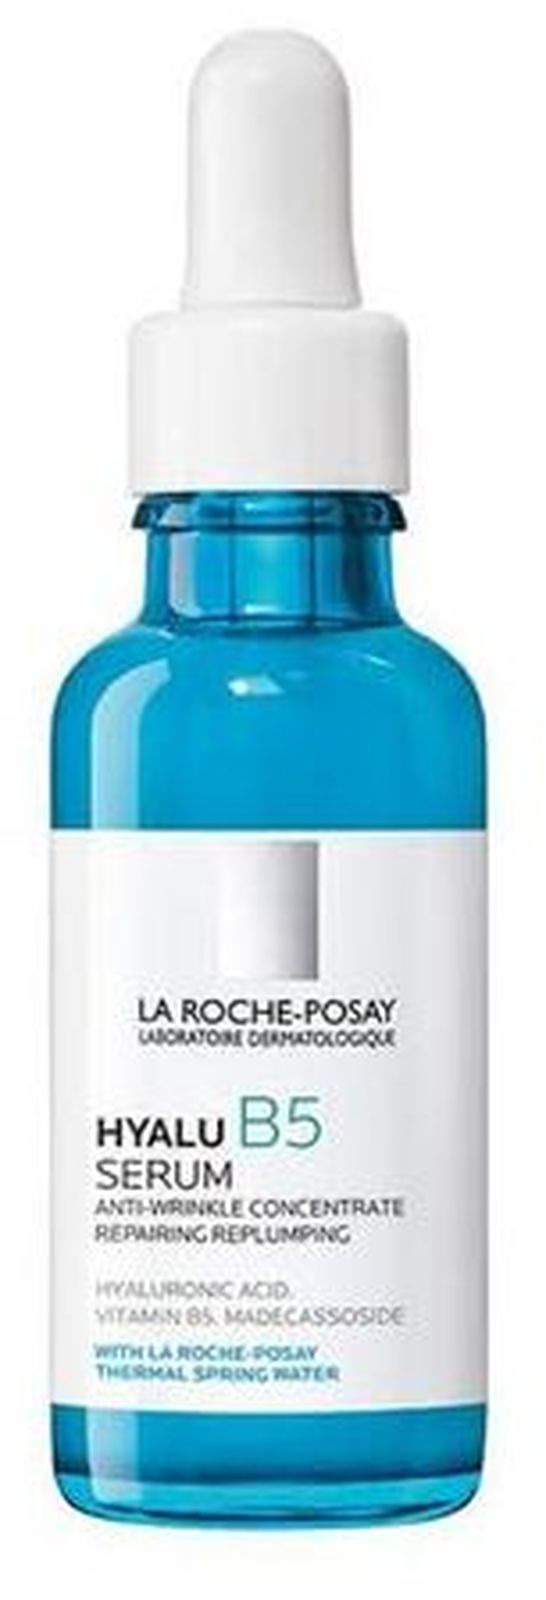 фото Сыворотка для лица La Roche-Posay Hyalu B5, увлажняющая, 30 мл